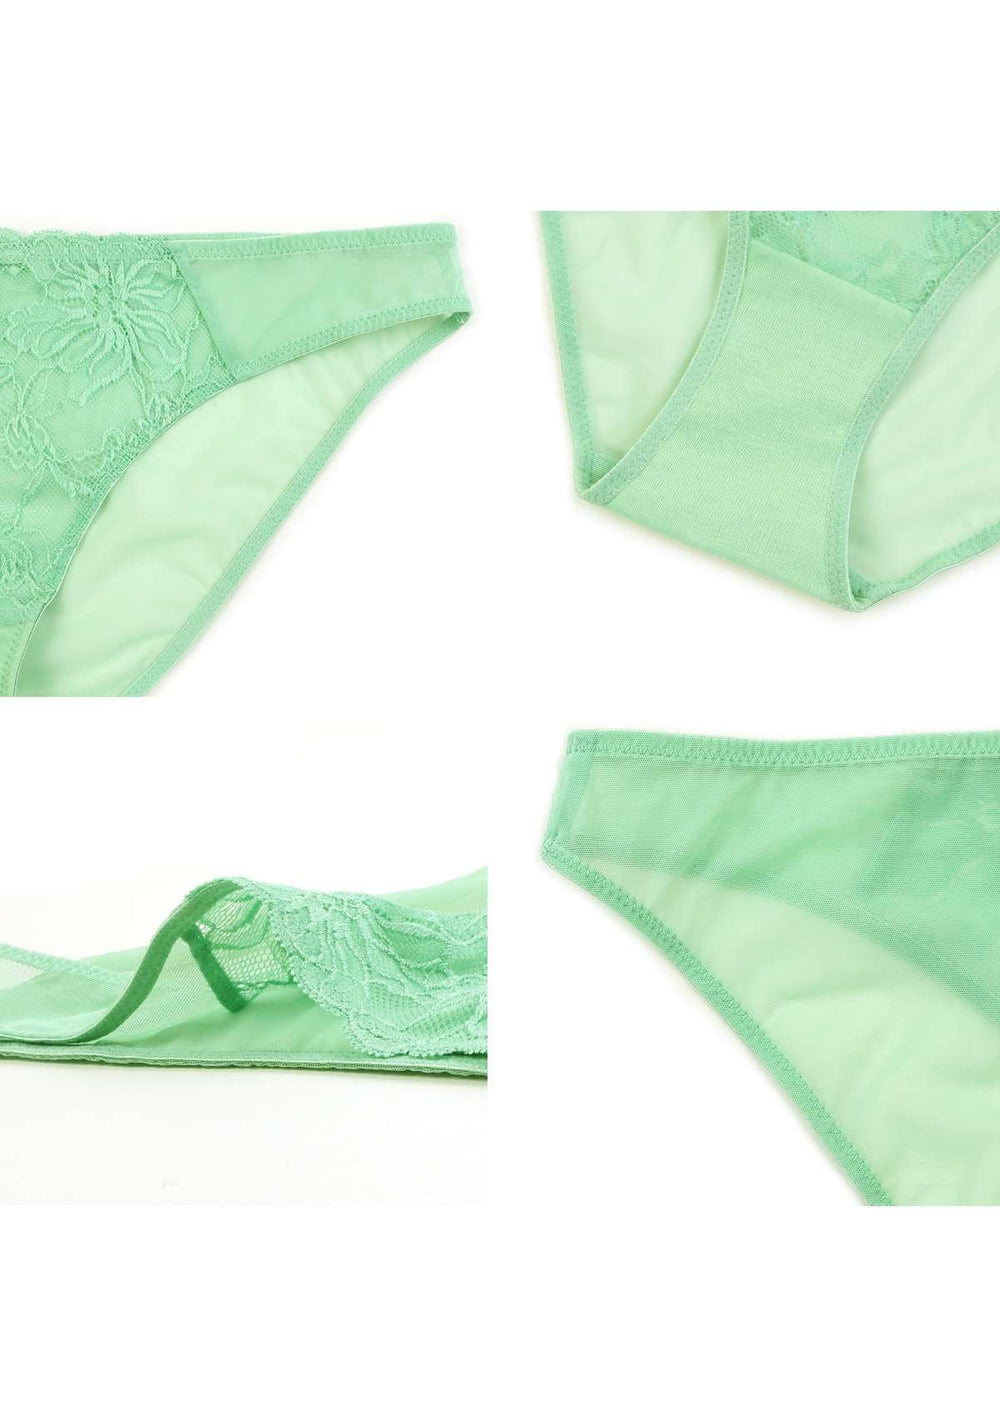 HSIA Foxy Satin Floral Lace Mesh Bikini Underwear: Comfortably Soft